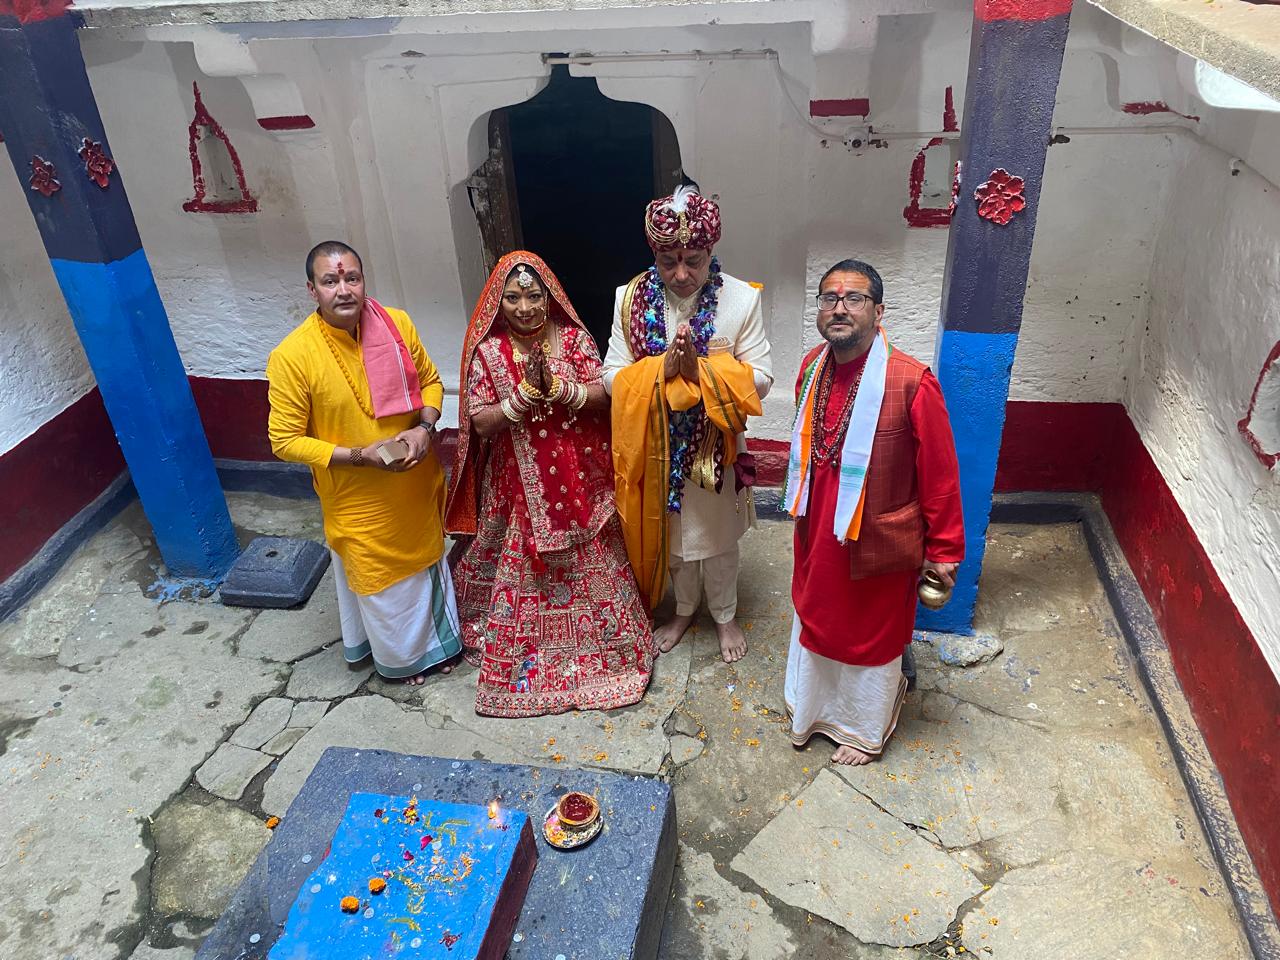 Omkareshwar Temple also became wedding destination After Triyuginarayan